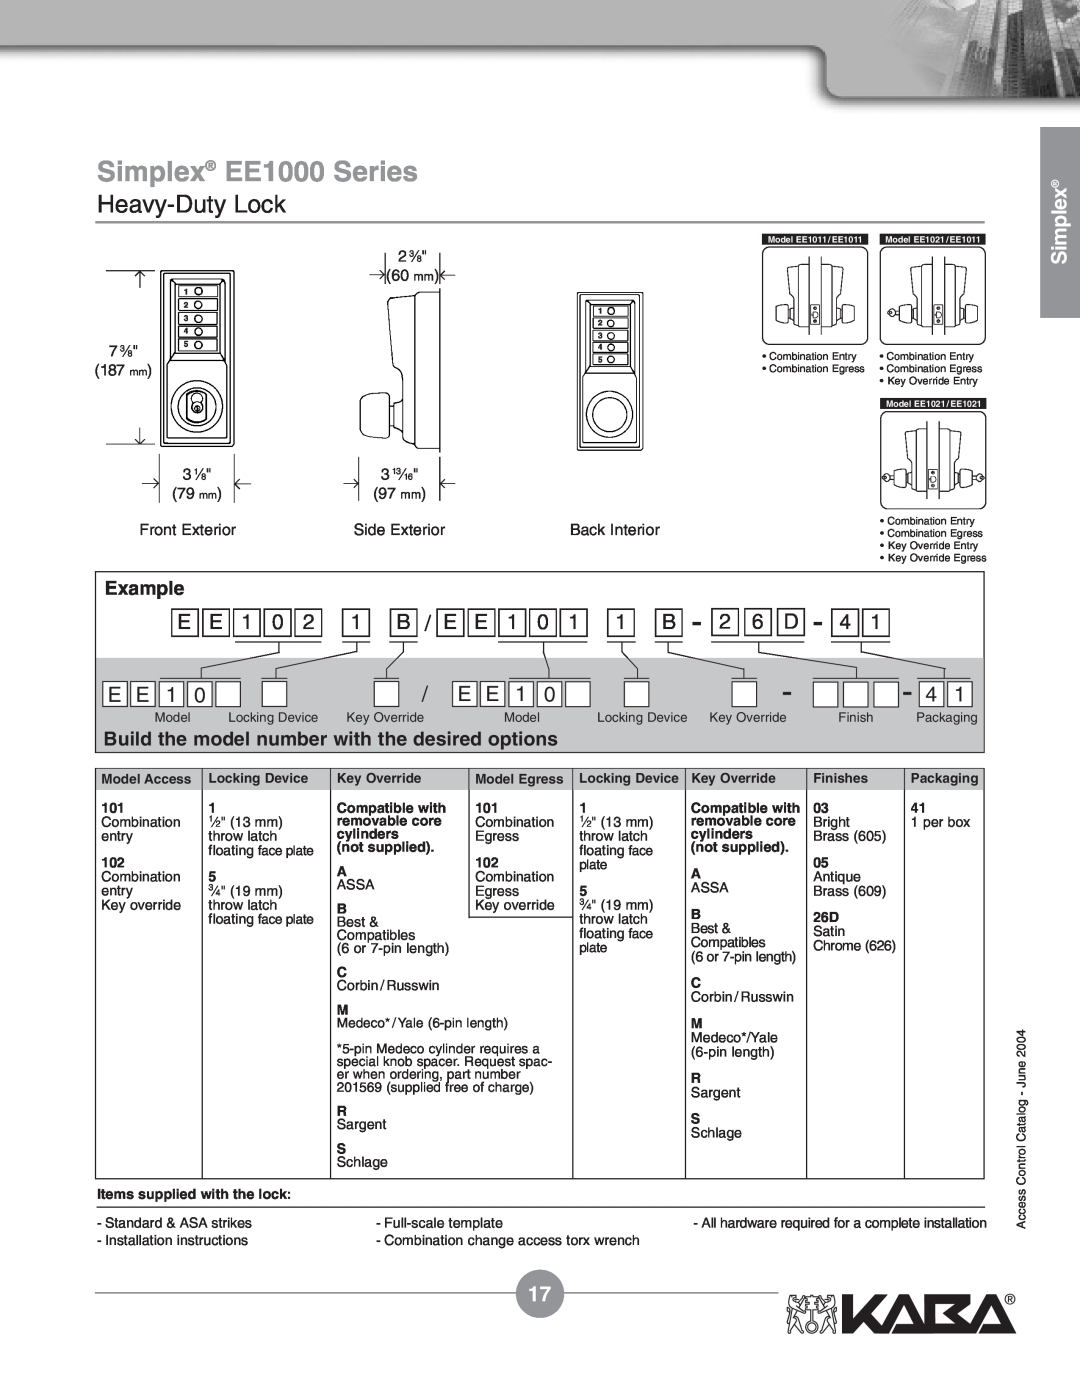 Assa Mechanical Pushbutton Locks manual E E 1 0 2 1 B / E E 1 0 1 1 B - 2 6 D - 4, Simplex EE1000 Series, Heavy-Duty Lock 